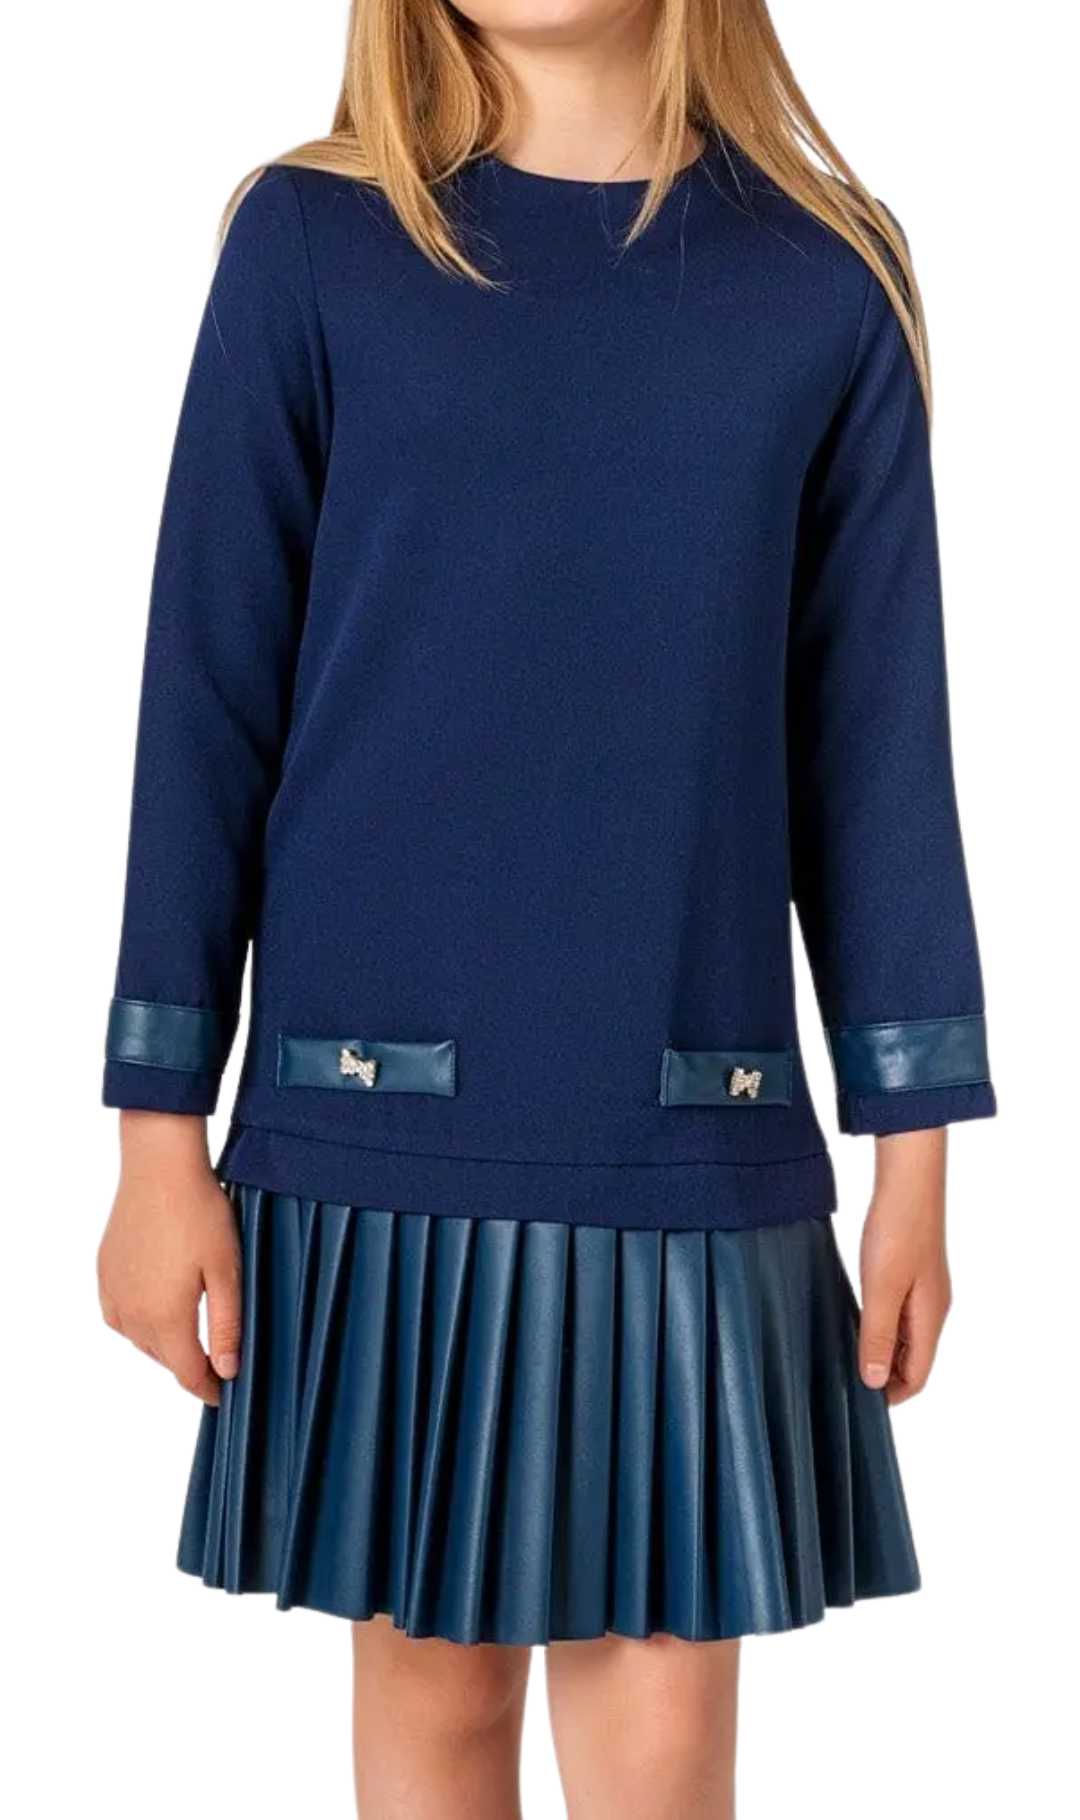 InCity Girls Tween 7-14 Years Navy Leather Skirt Long Sleeve Fashion Andover Dress InCity Boys Girls